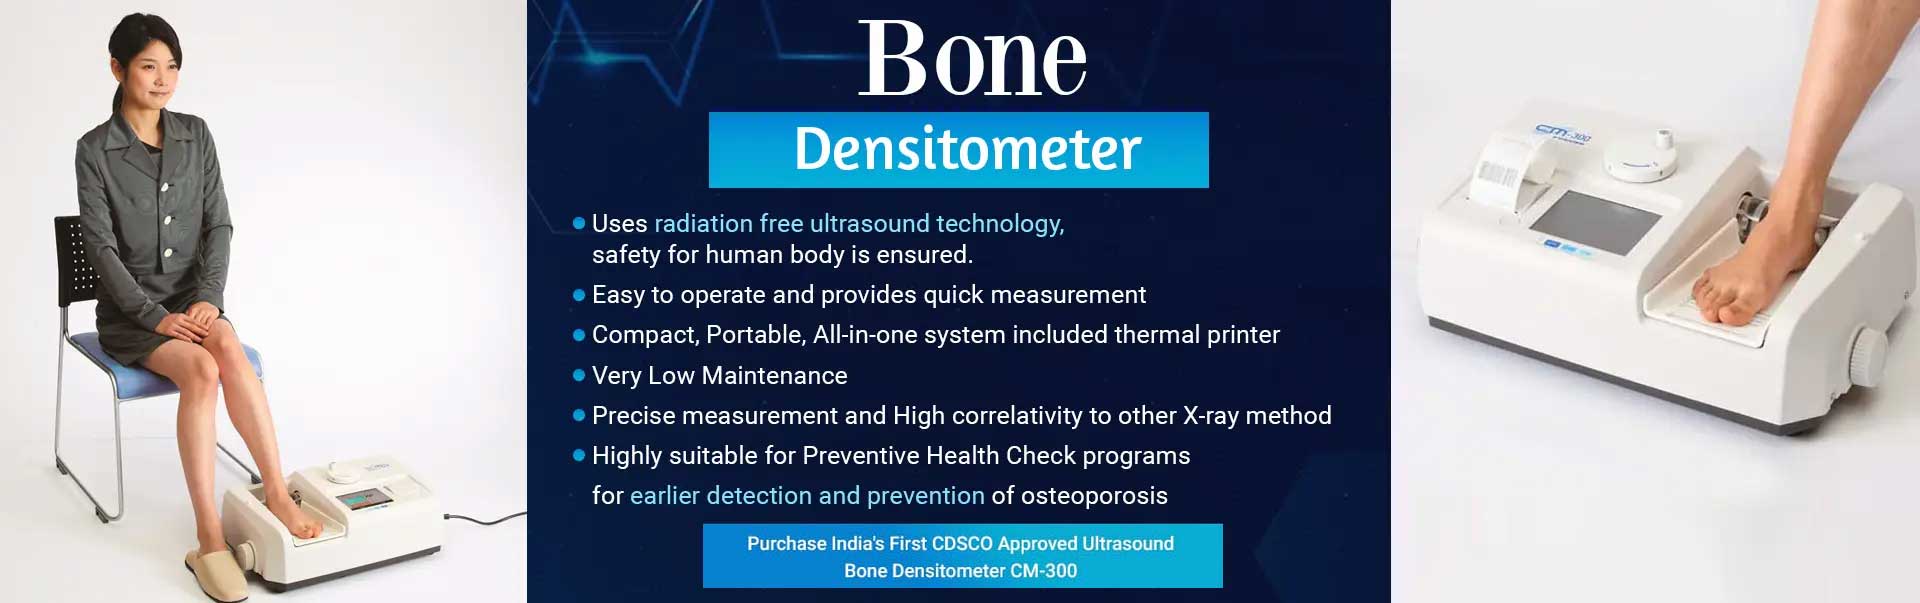 Bone Densitometer Manufacturers in Aurangabad